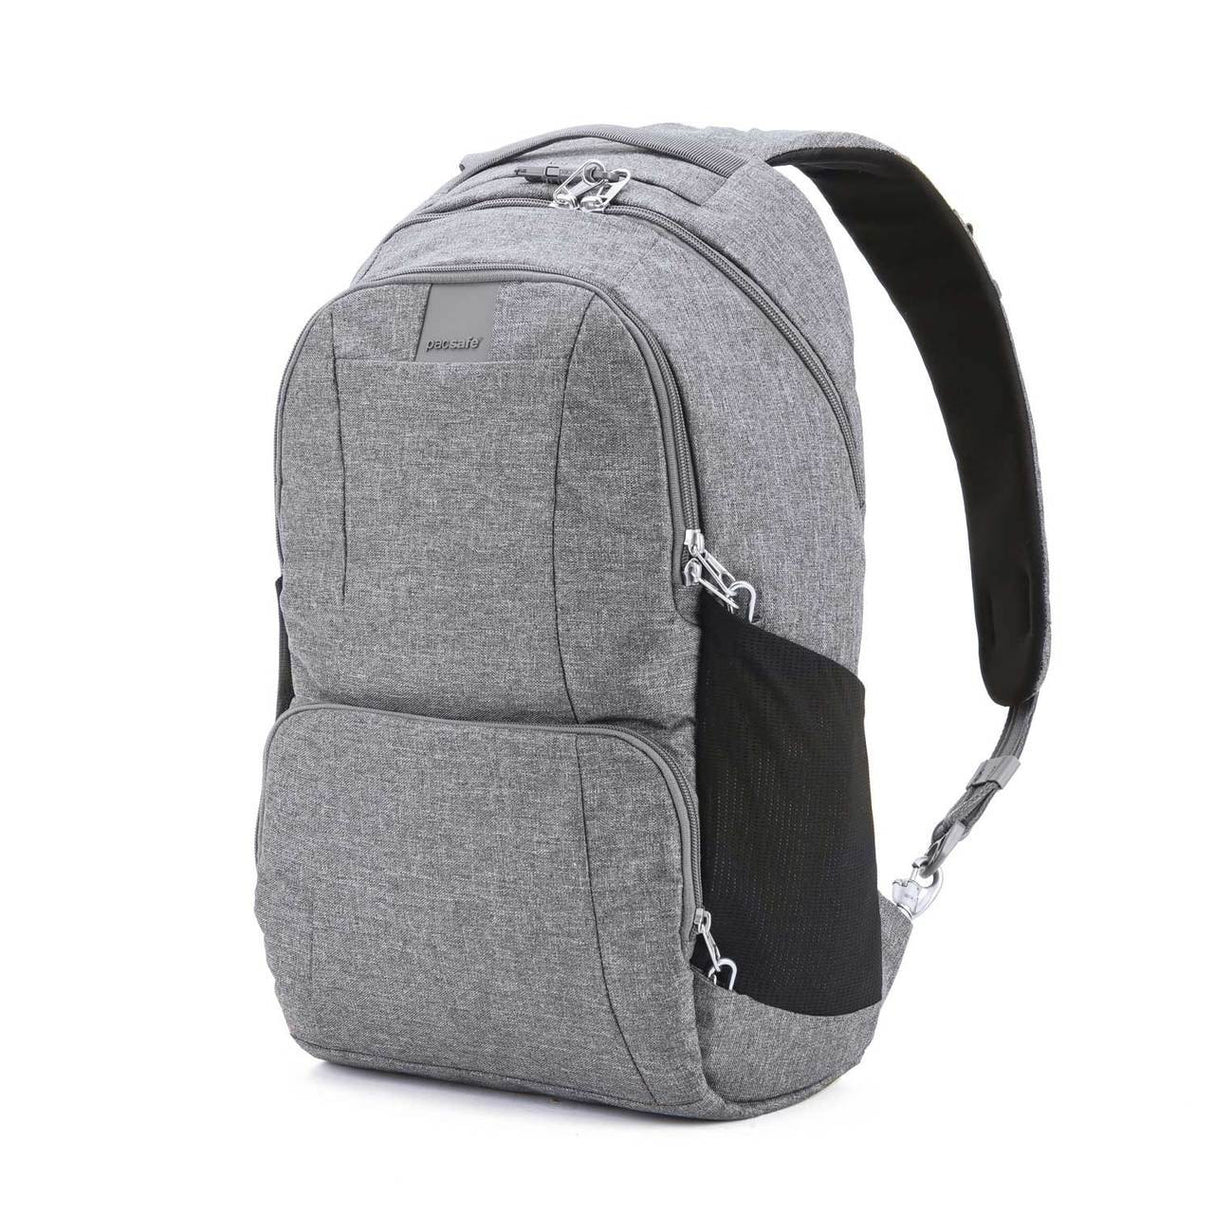 Pacsafe Metrosafe 25L backpack tweed